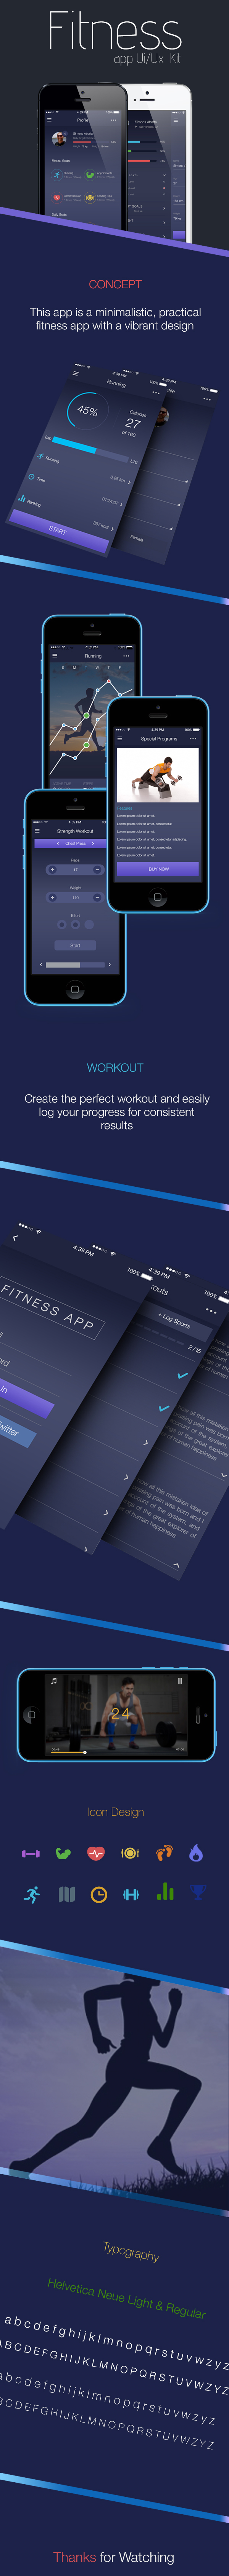 Free Fitness App UI Kit PSD